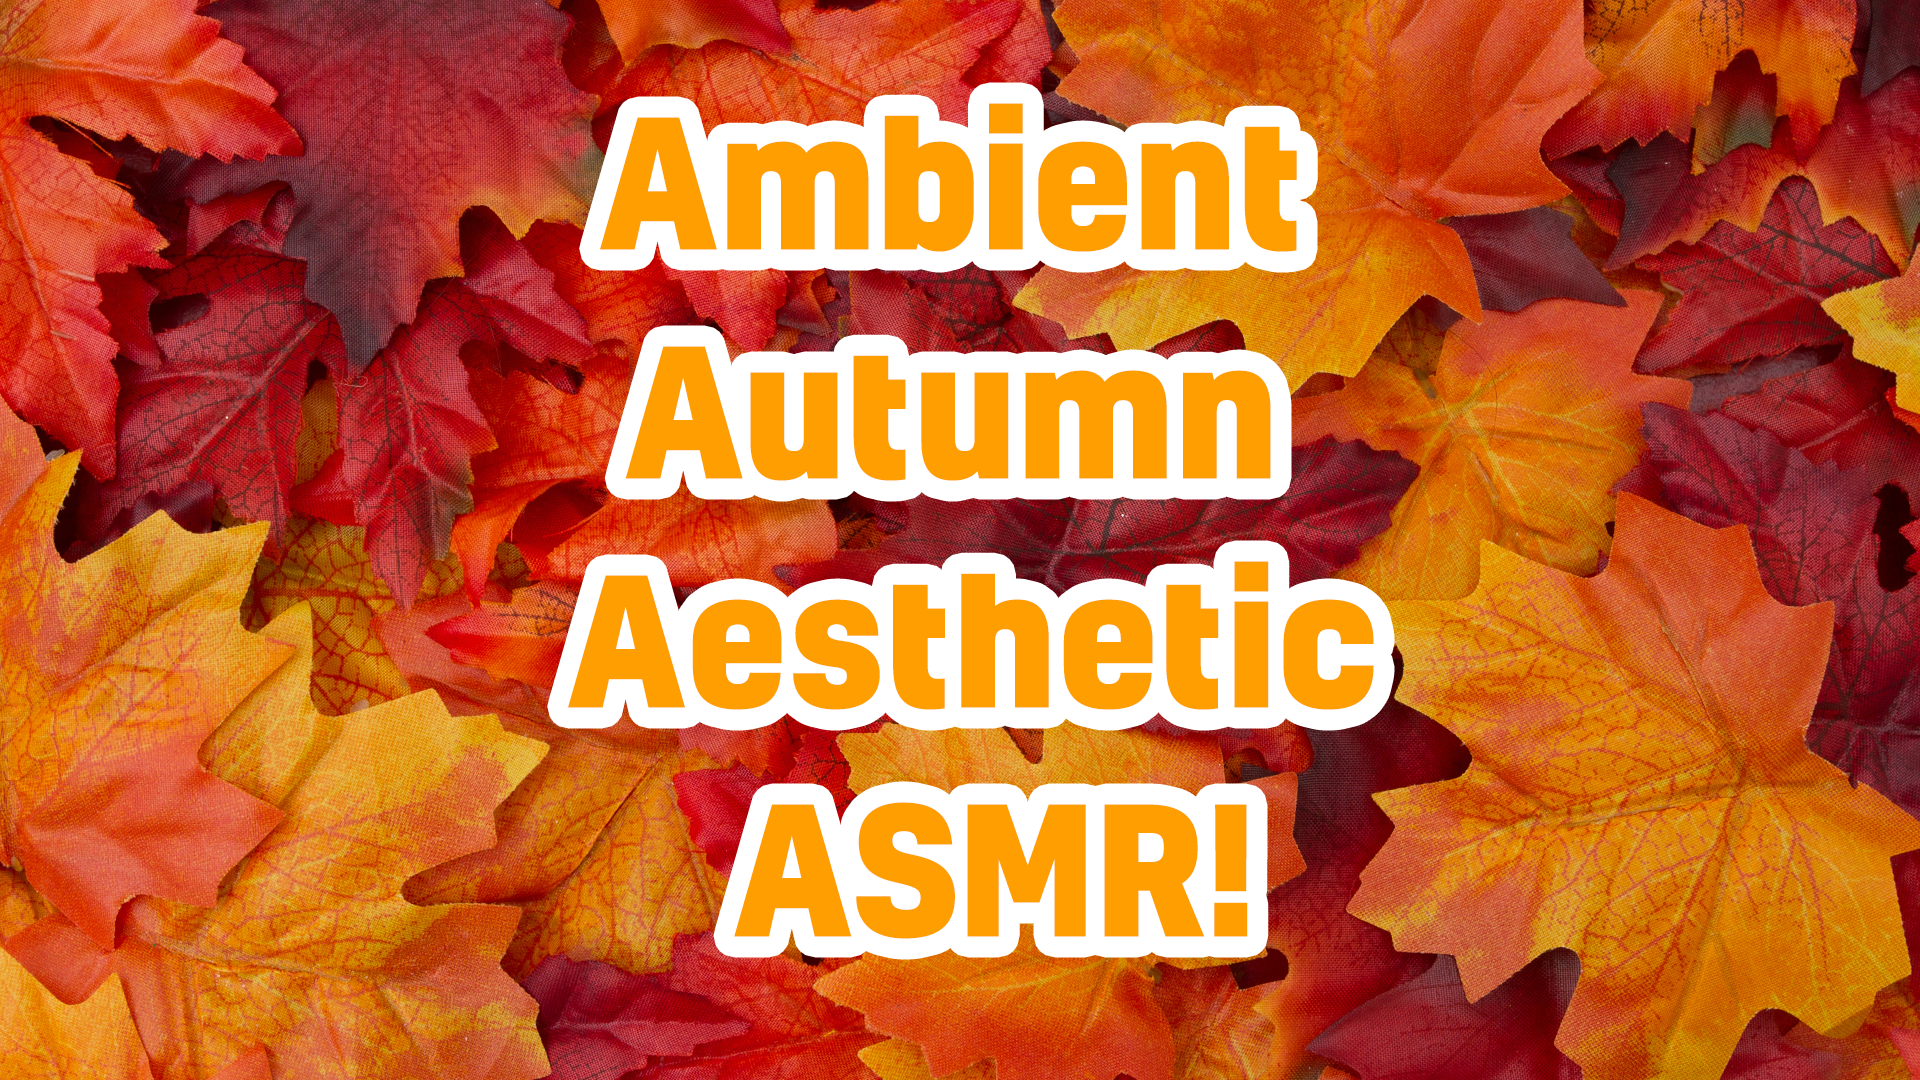 Ambient Autumn Aesthetic ASMR